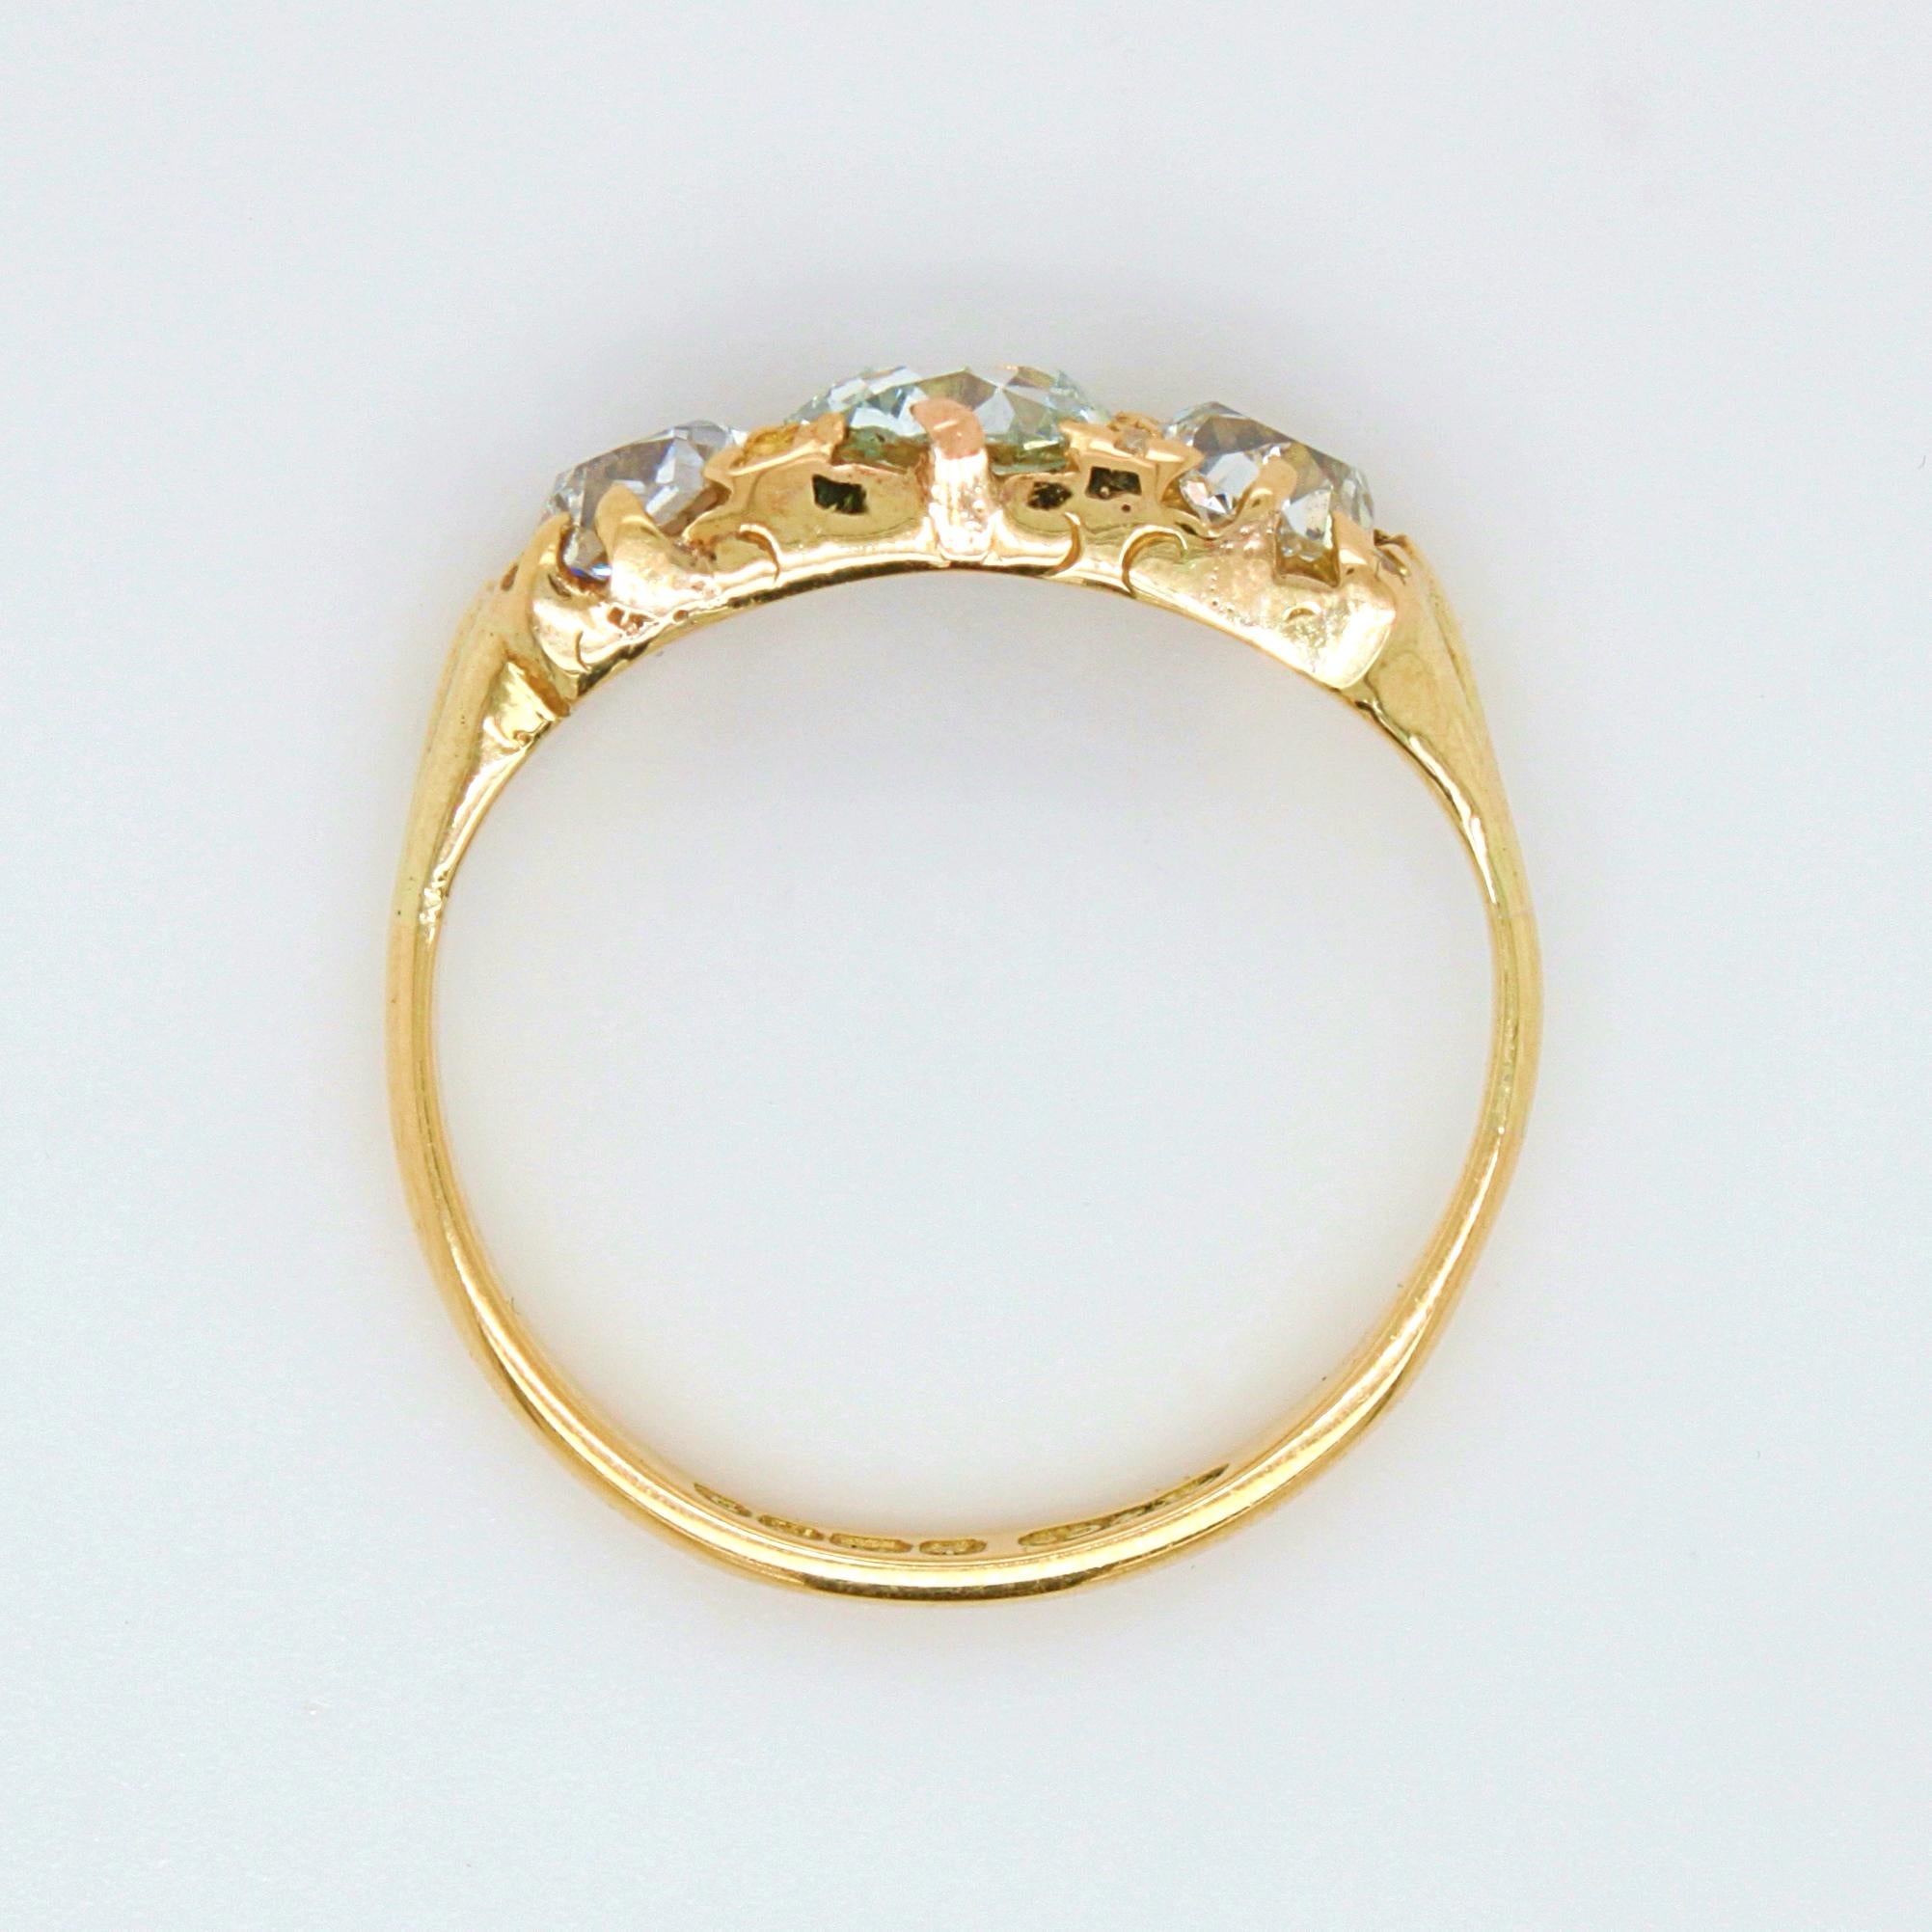 Women's Victorian Very Light Green 'GIA' Old Cut Three Diamond Ring, ca. 1880s